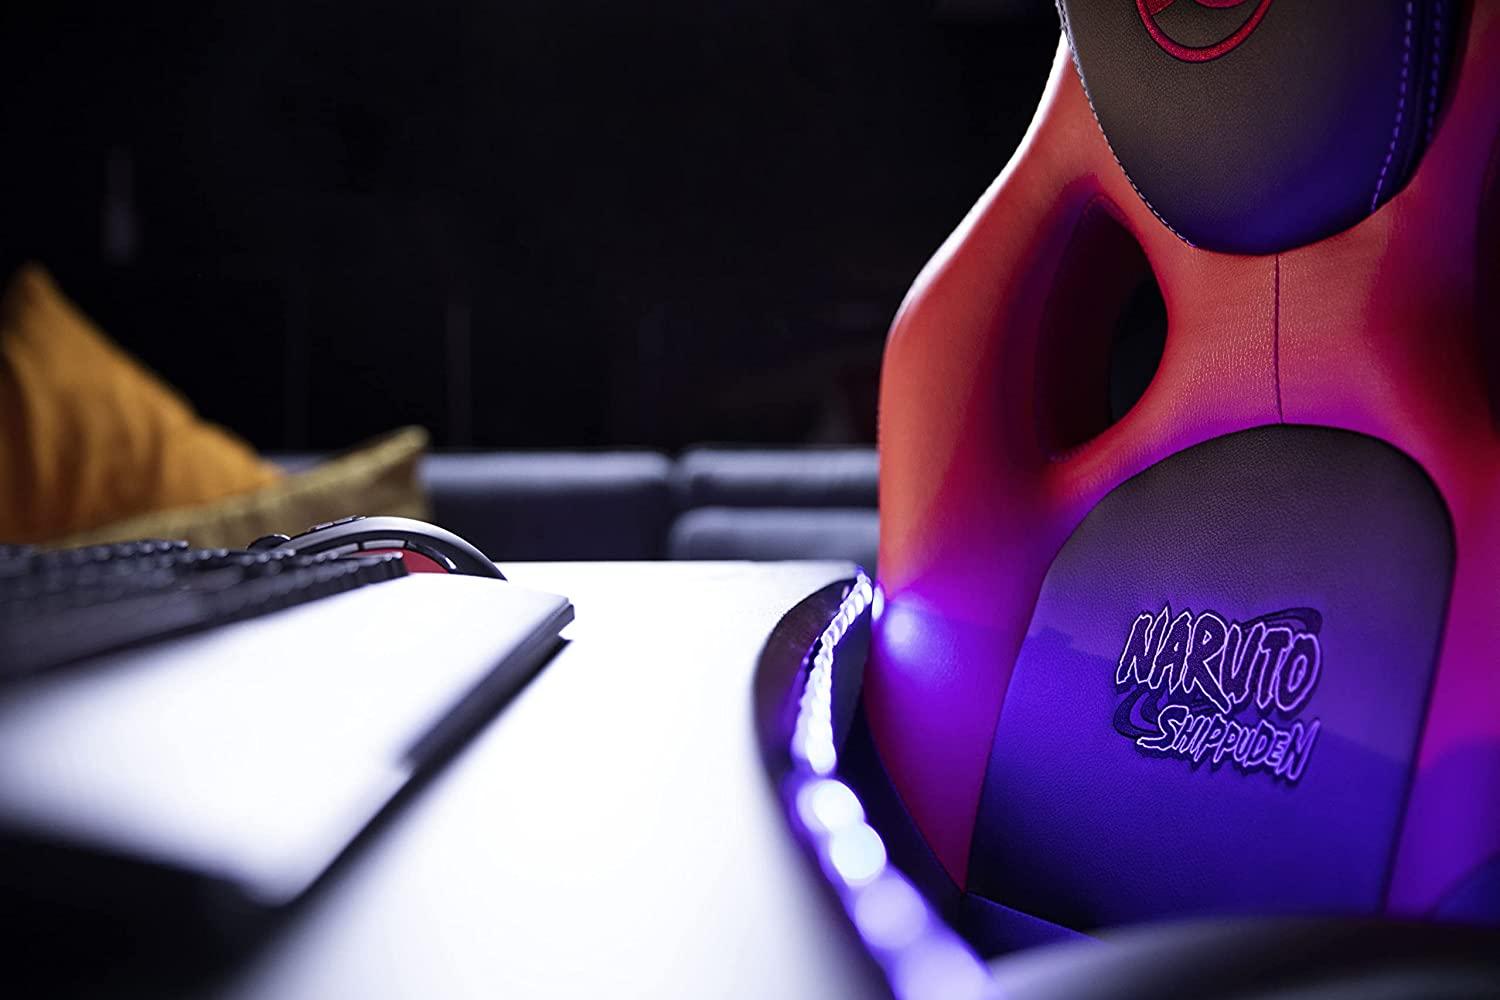 KONIX Naruto Shippuden Junior Gaming Chair (Black/Red) - GameStore.mt | Powered by Flutisat